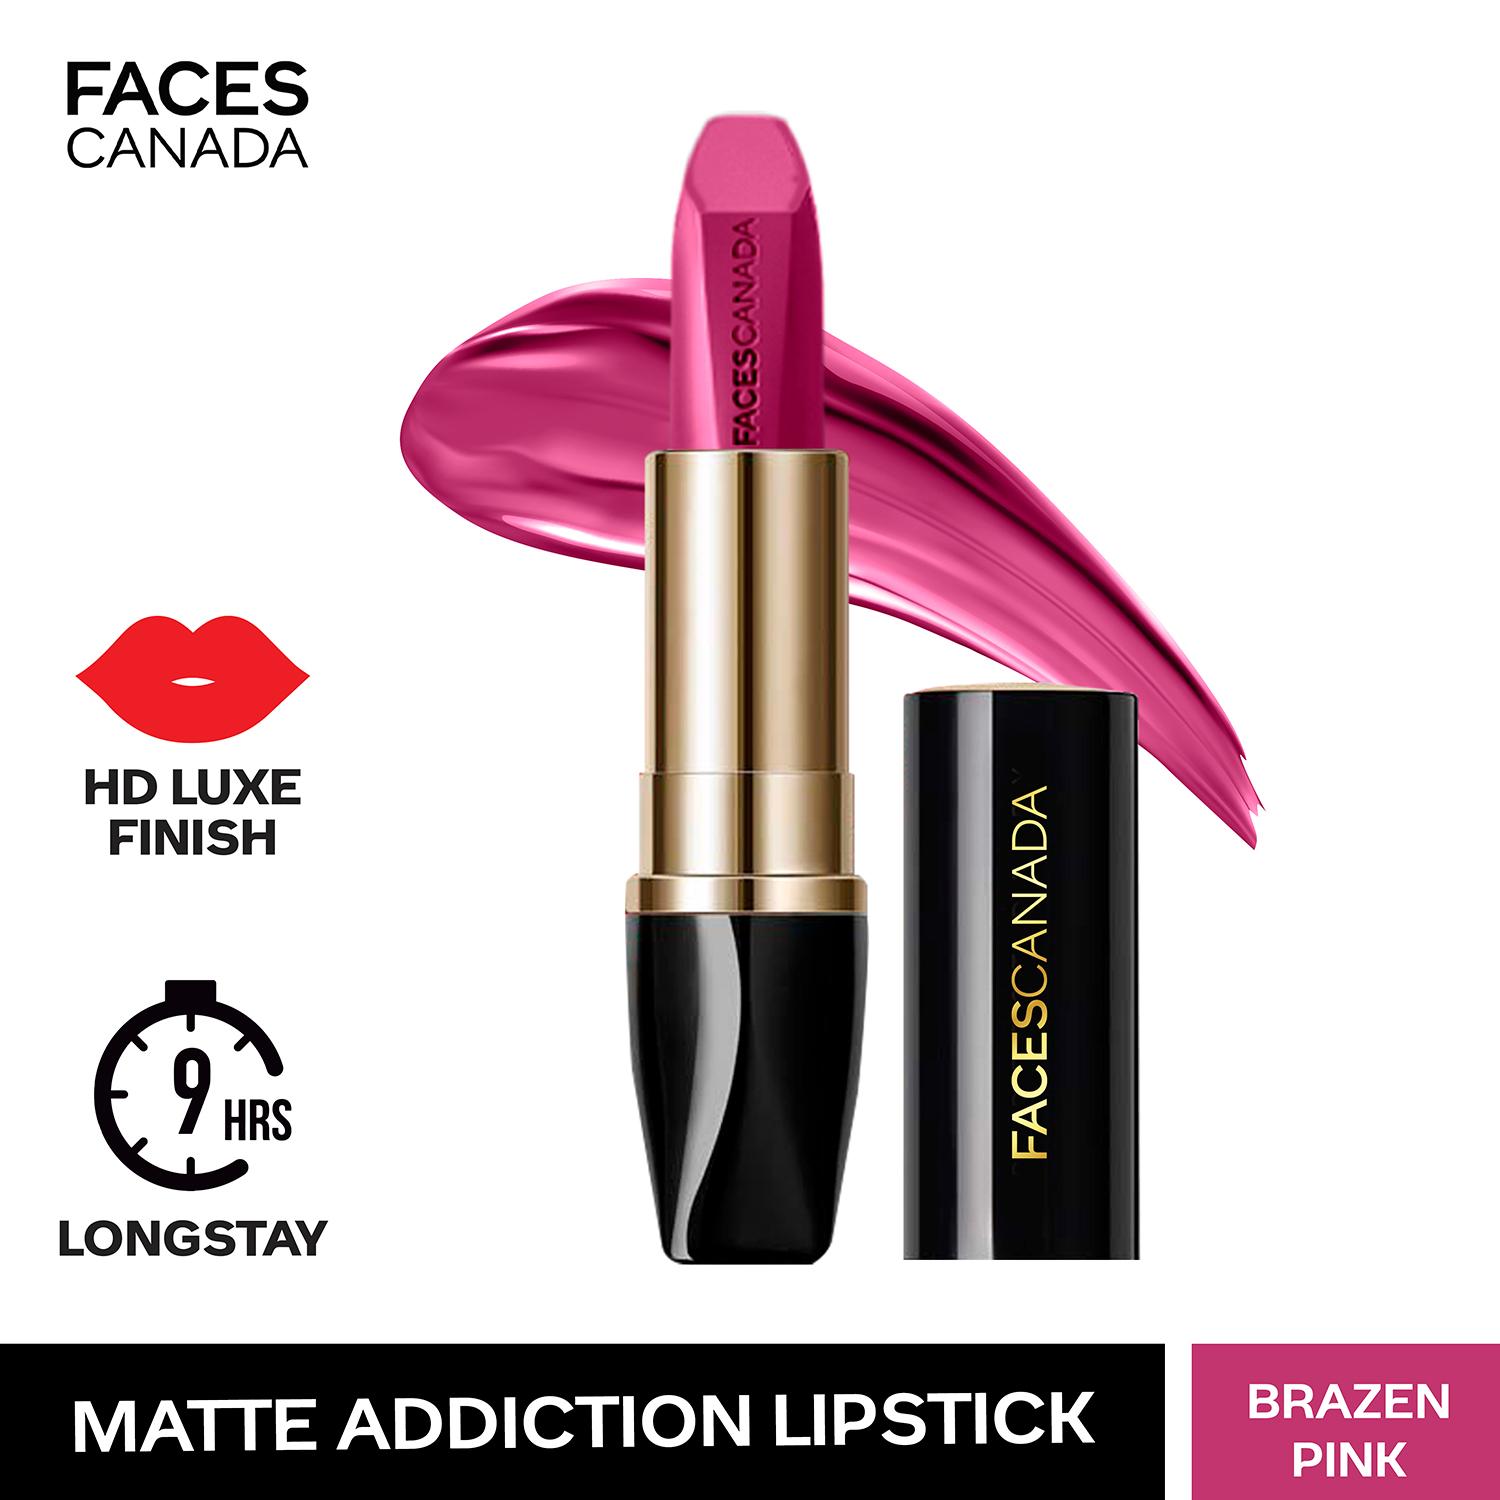 Faces Canada | Faces Canada Matte Addiction Lipstick, 9HR Stay, HD Finish, Intense Color - Brazen Pink (3.7 g)